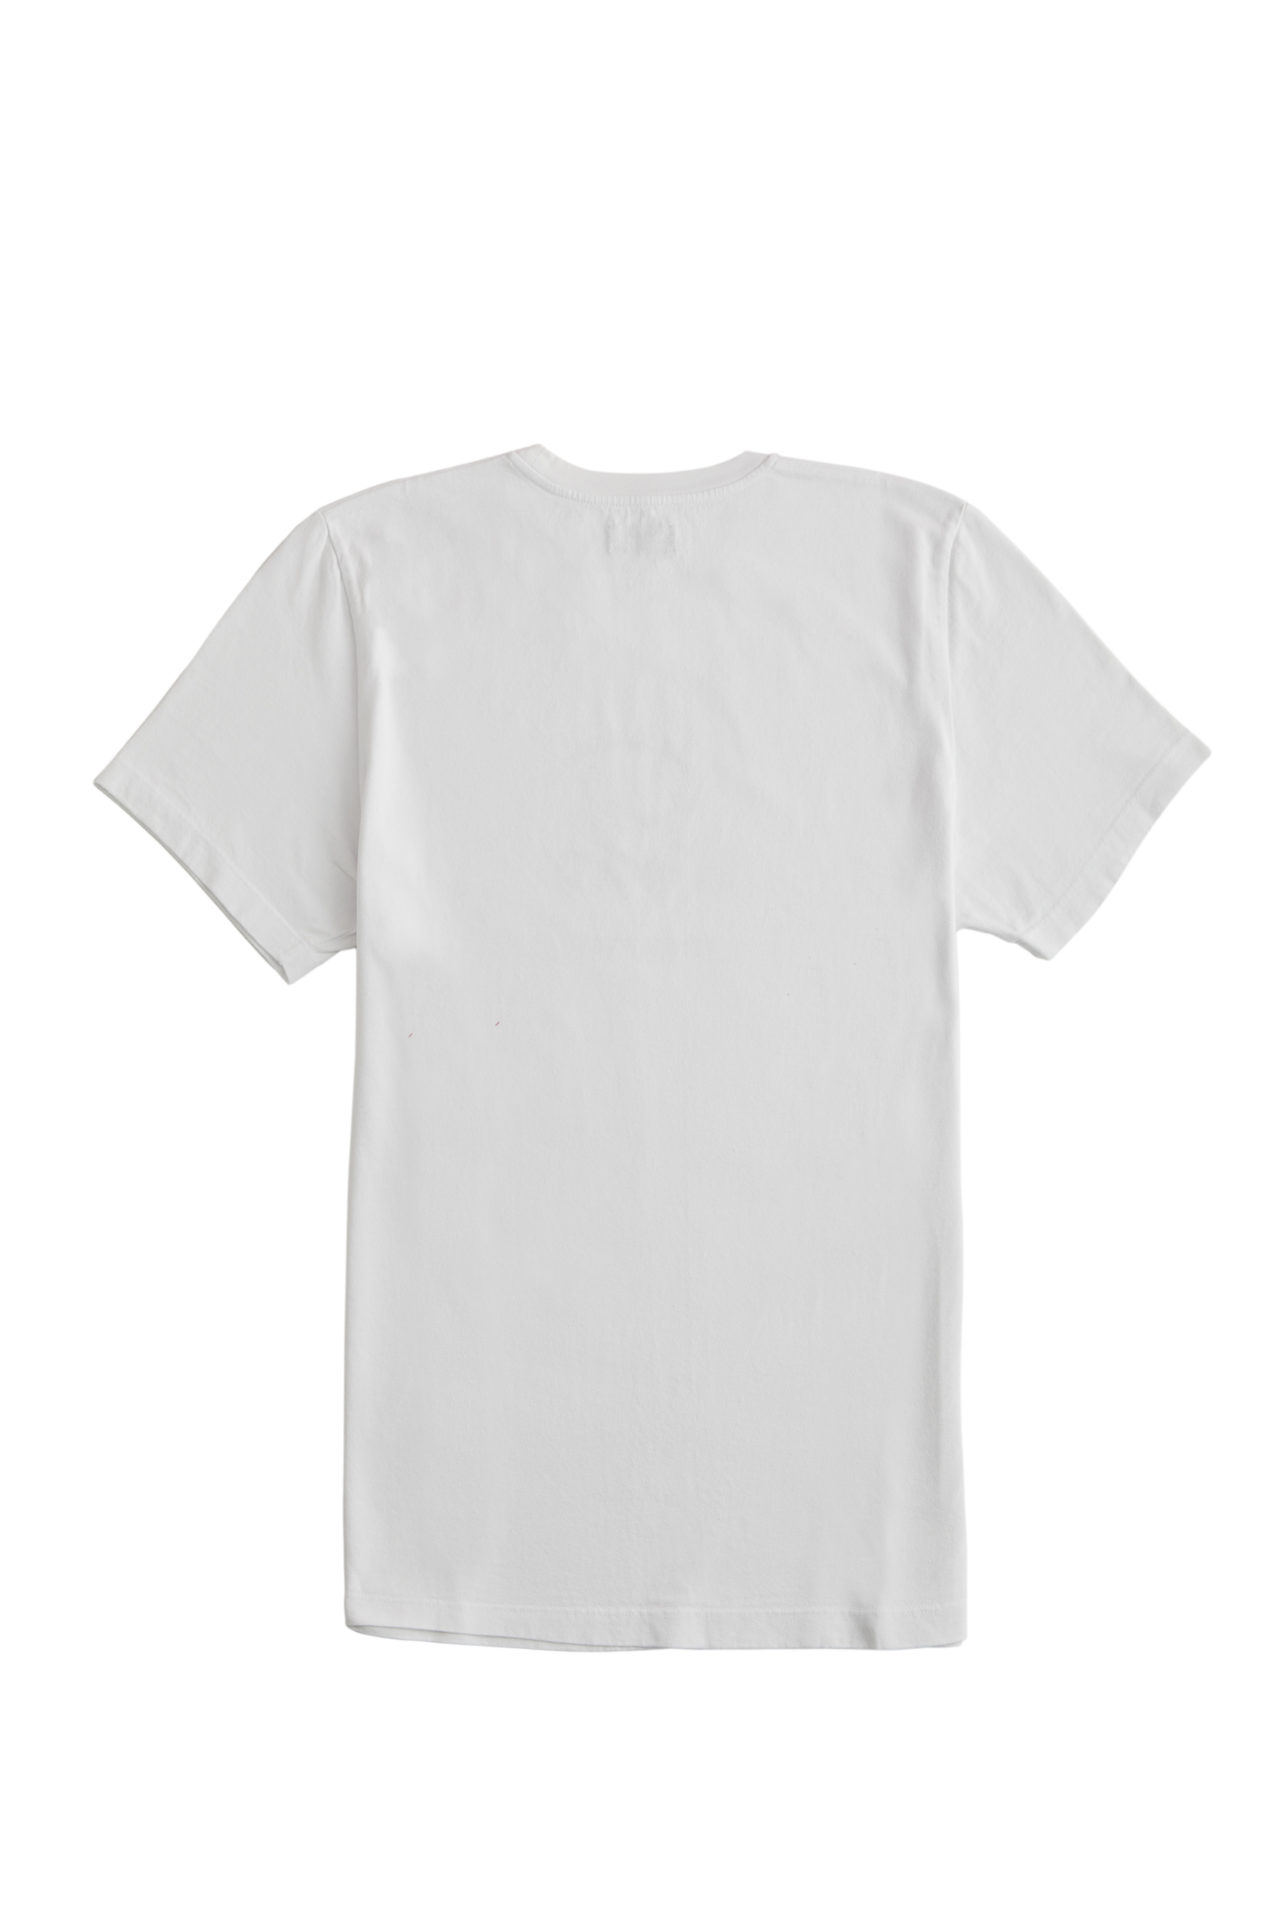 Plain White Cotton T-Shirt - Barbanera